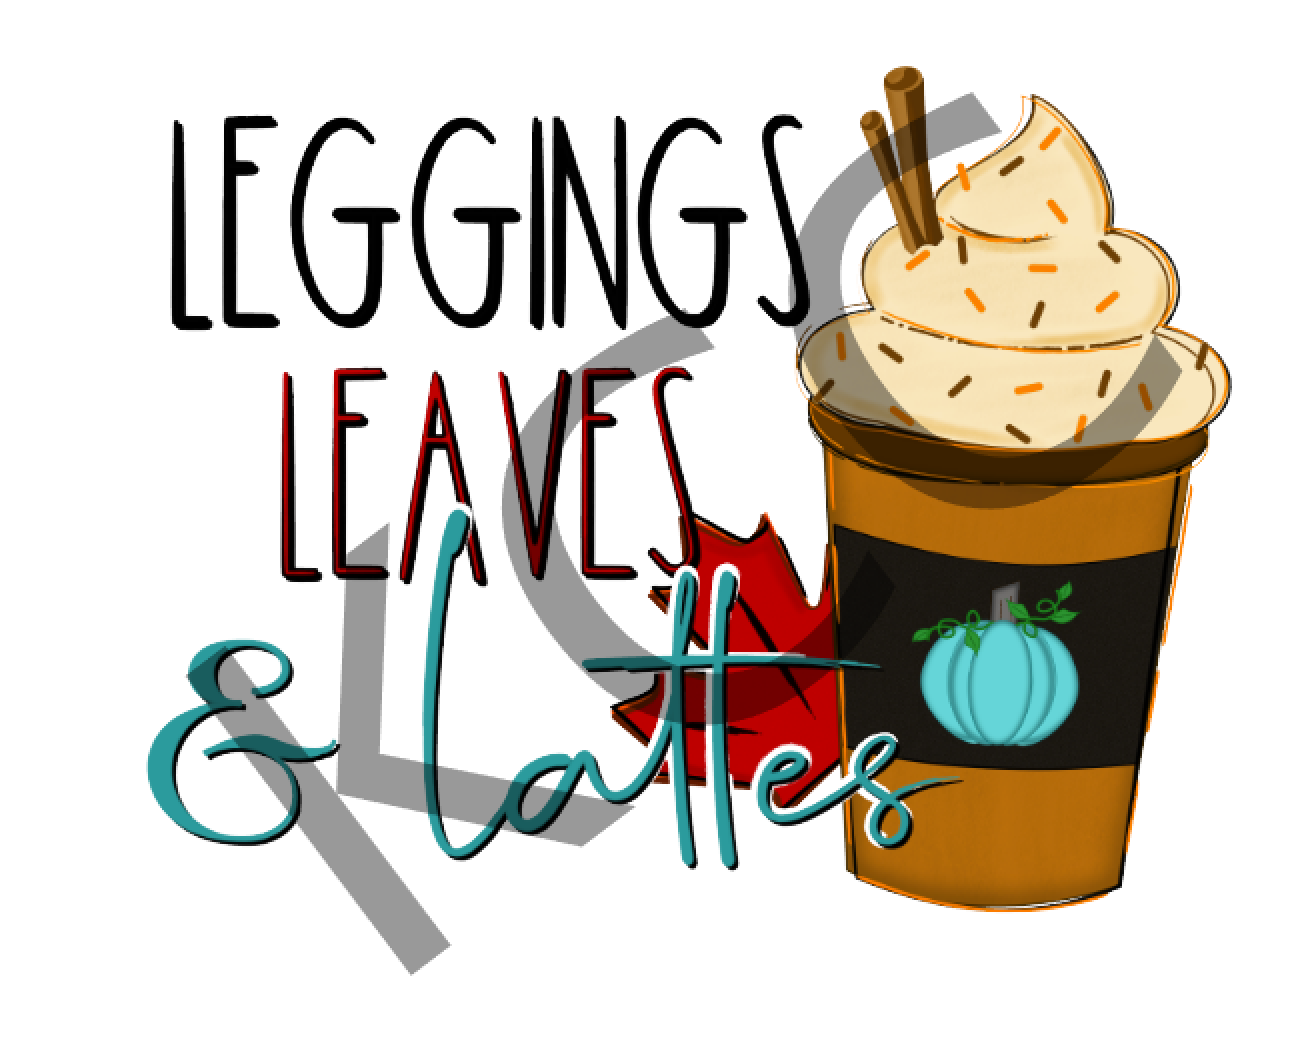 Leggings Leaves Lattes